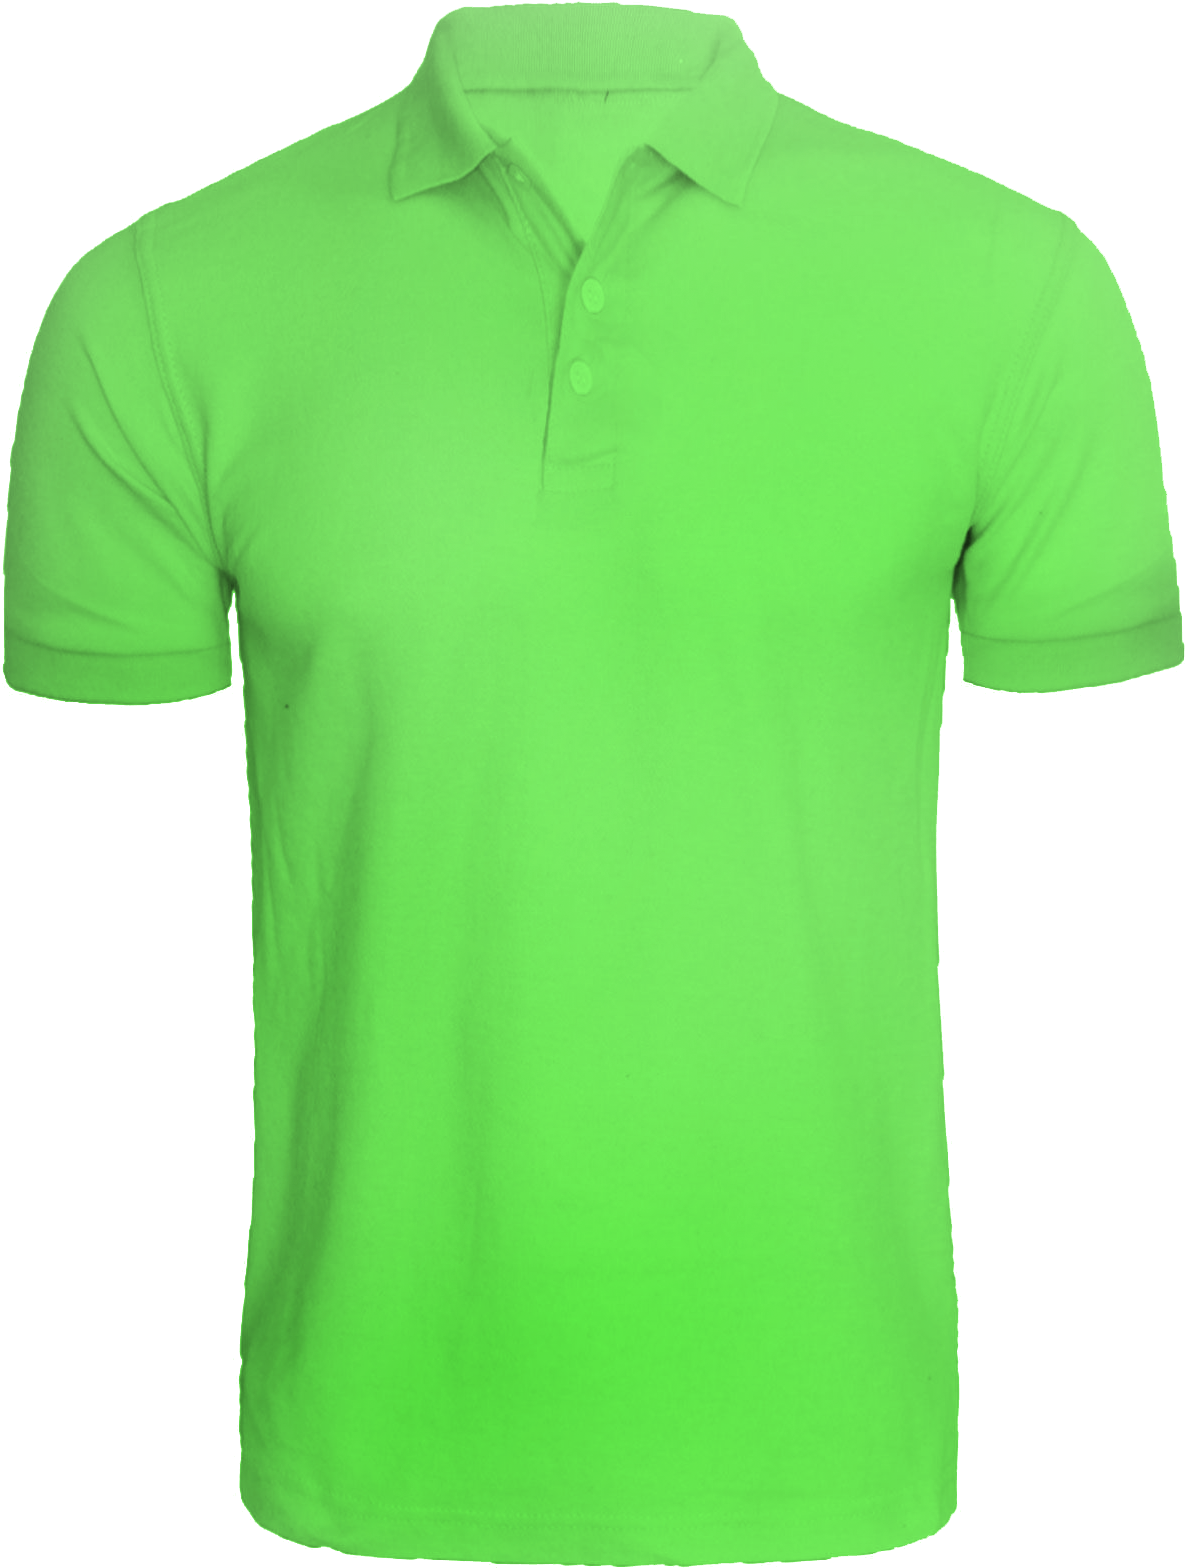 Download Neon Green Polo Shirt | Wallpapers.com